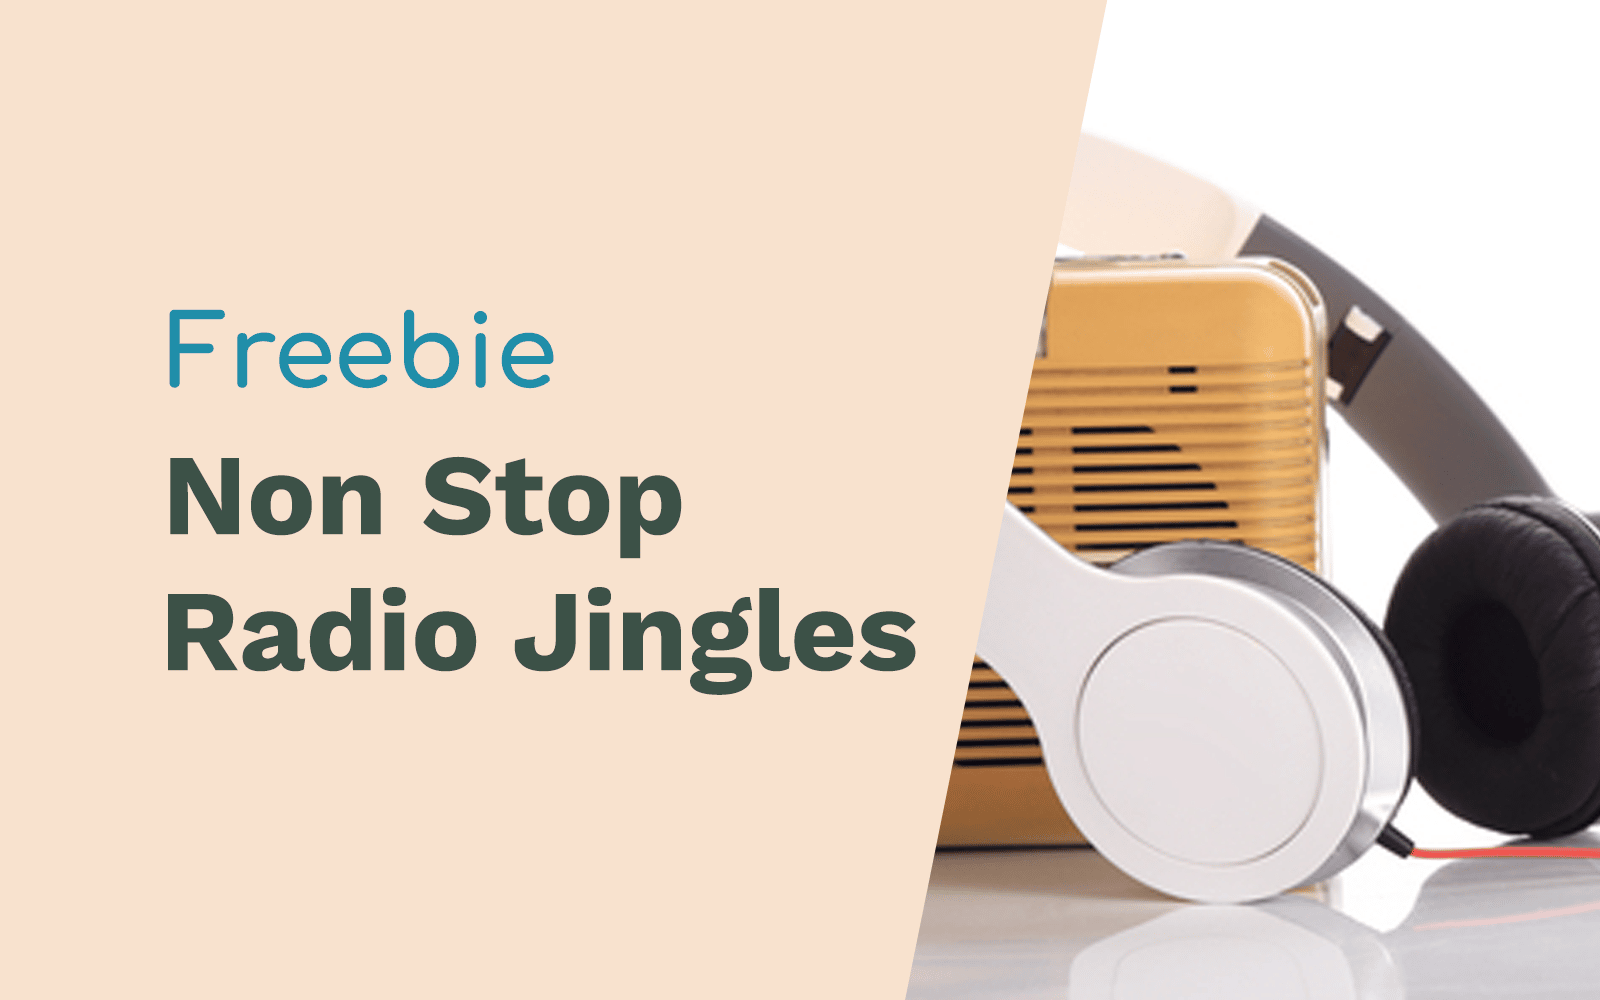 Free Radio Jingles: Non Stop Music Free Jingles radio jingles Music Radio Creative